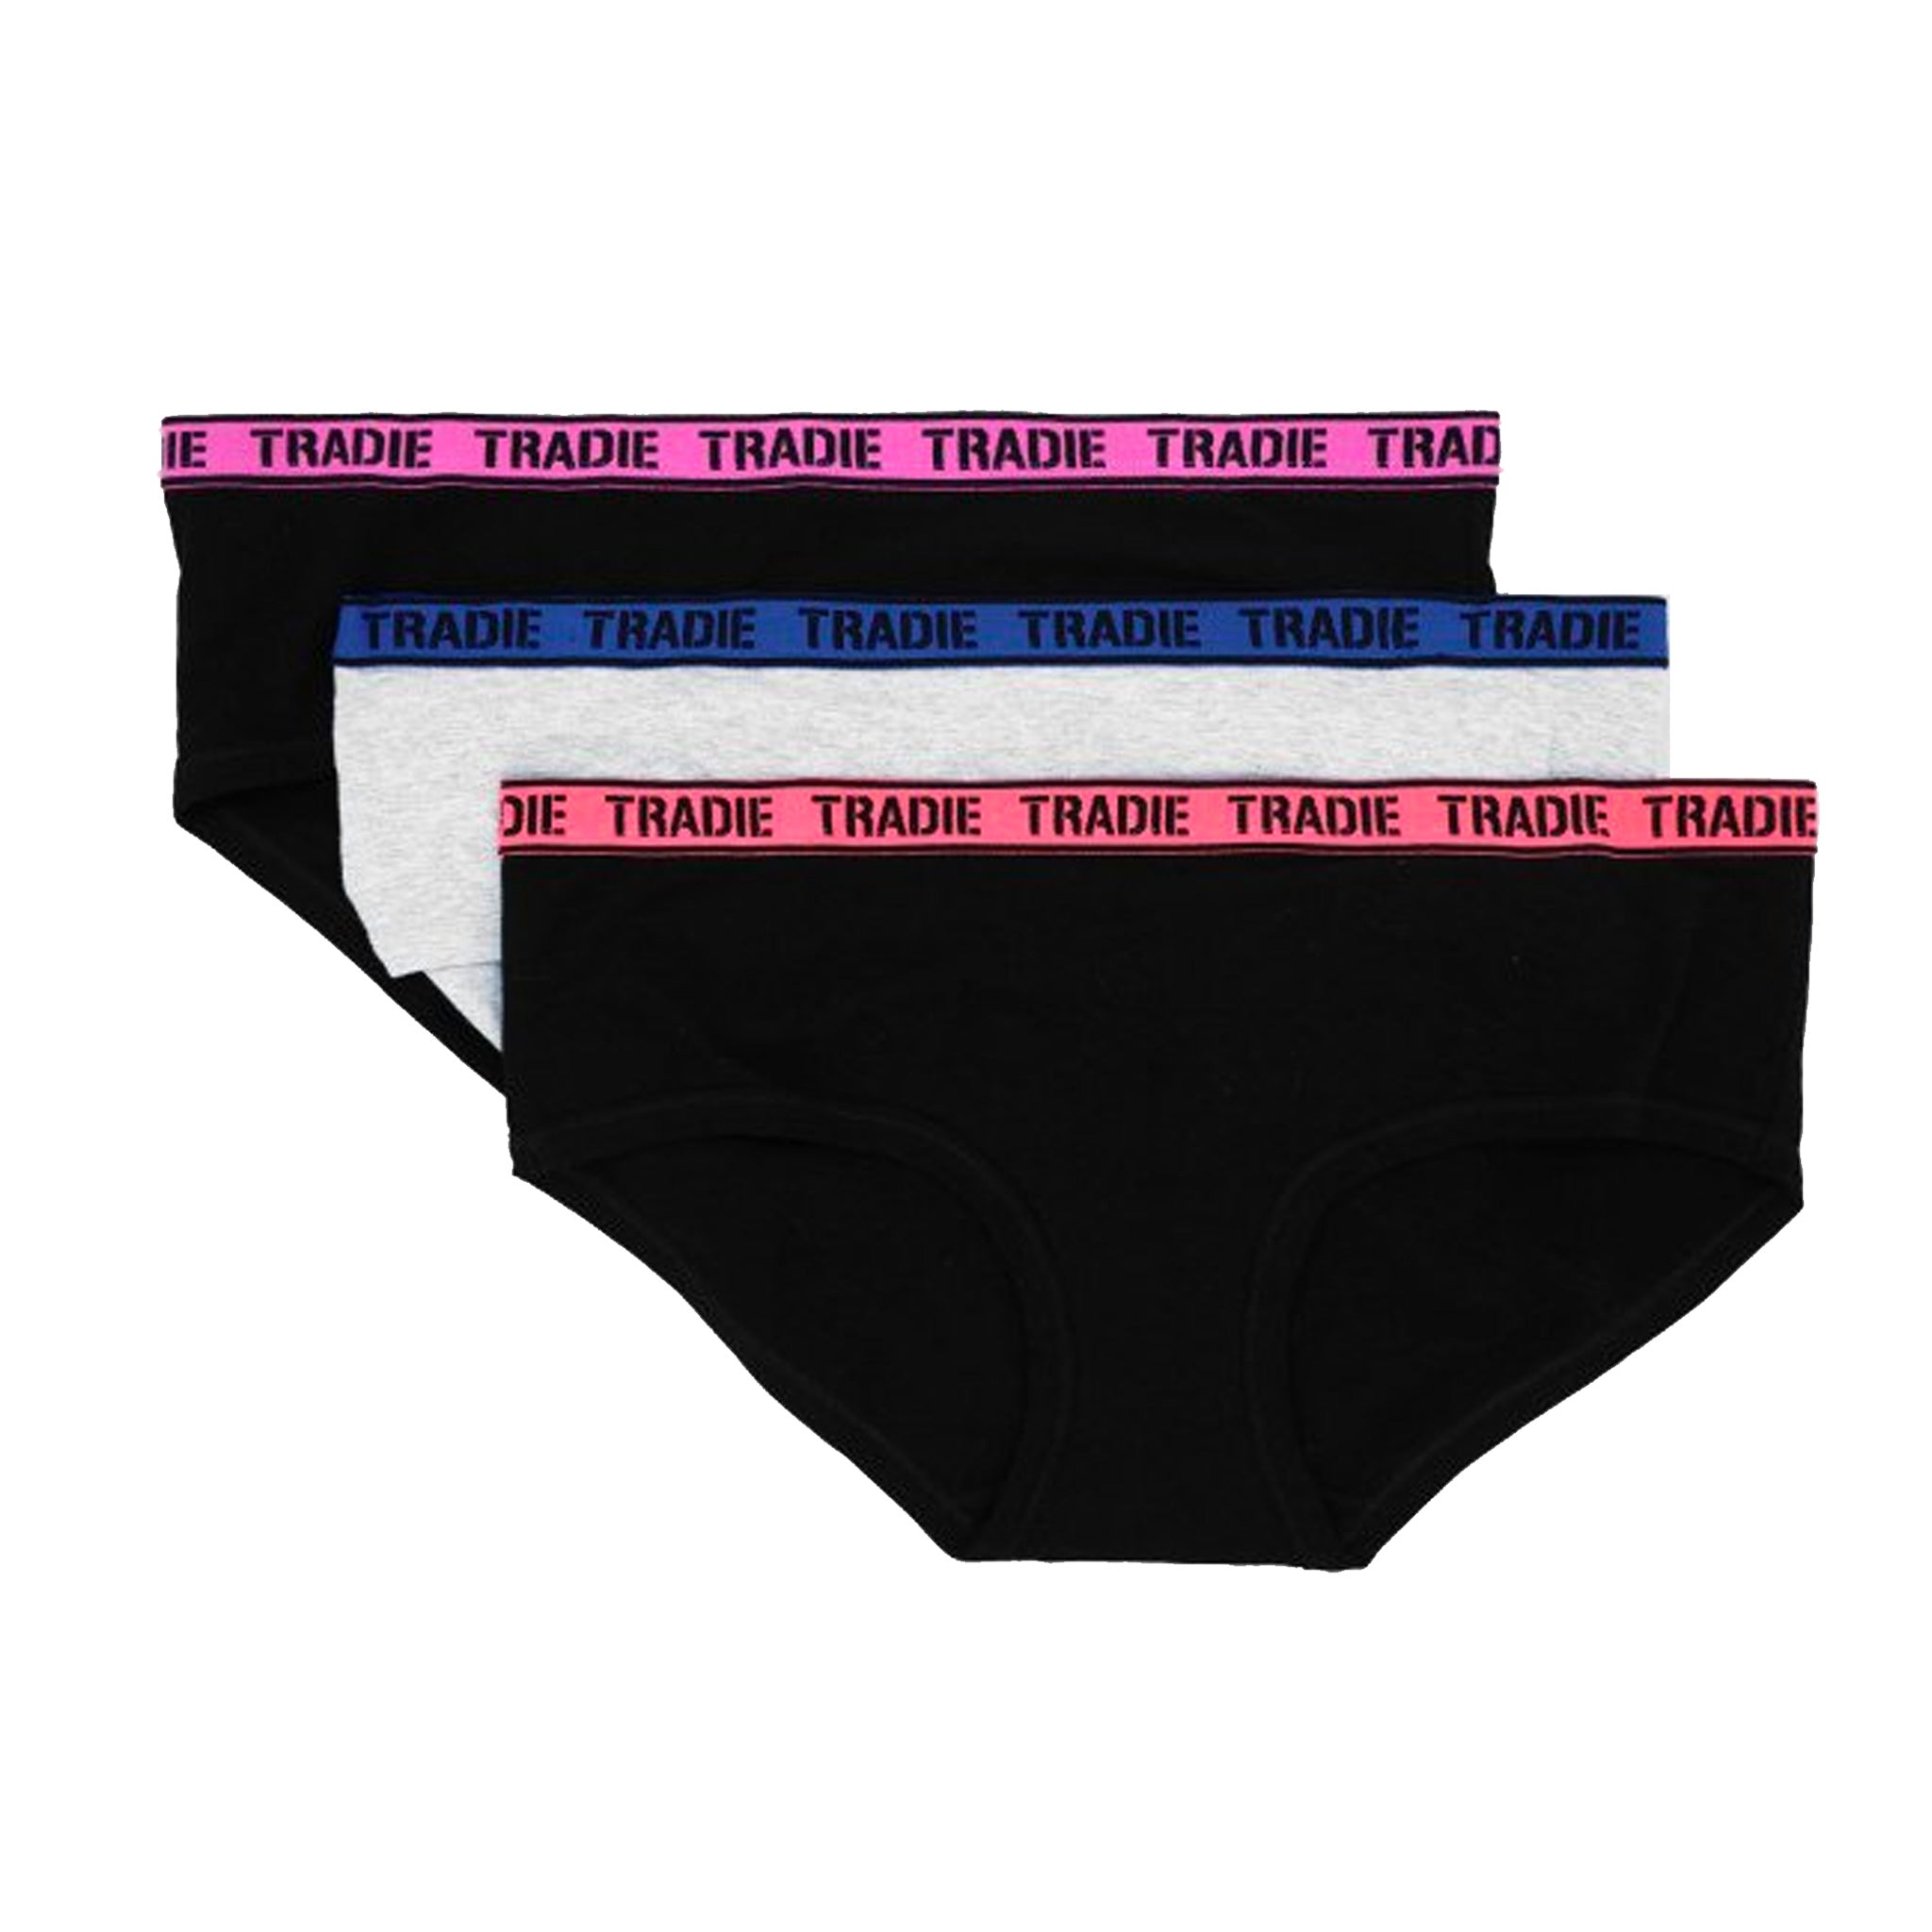 Tradie Lady 3-Pack Cheekster WJ3350SB3 Core Womens Underwear